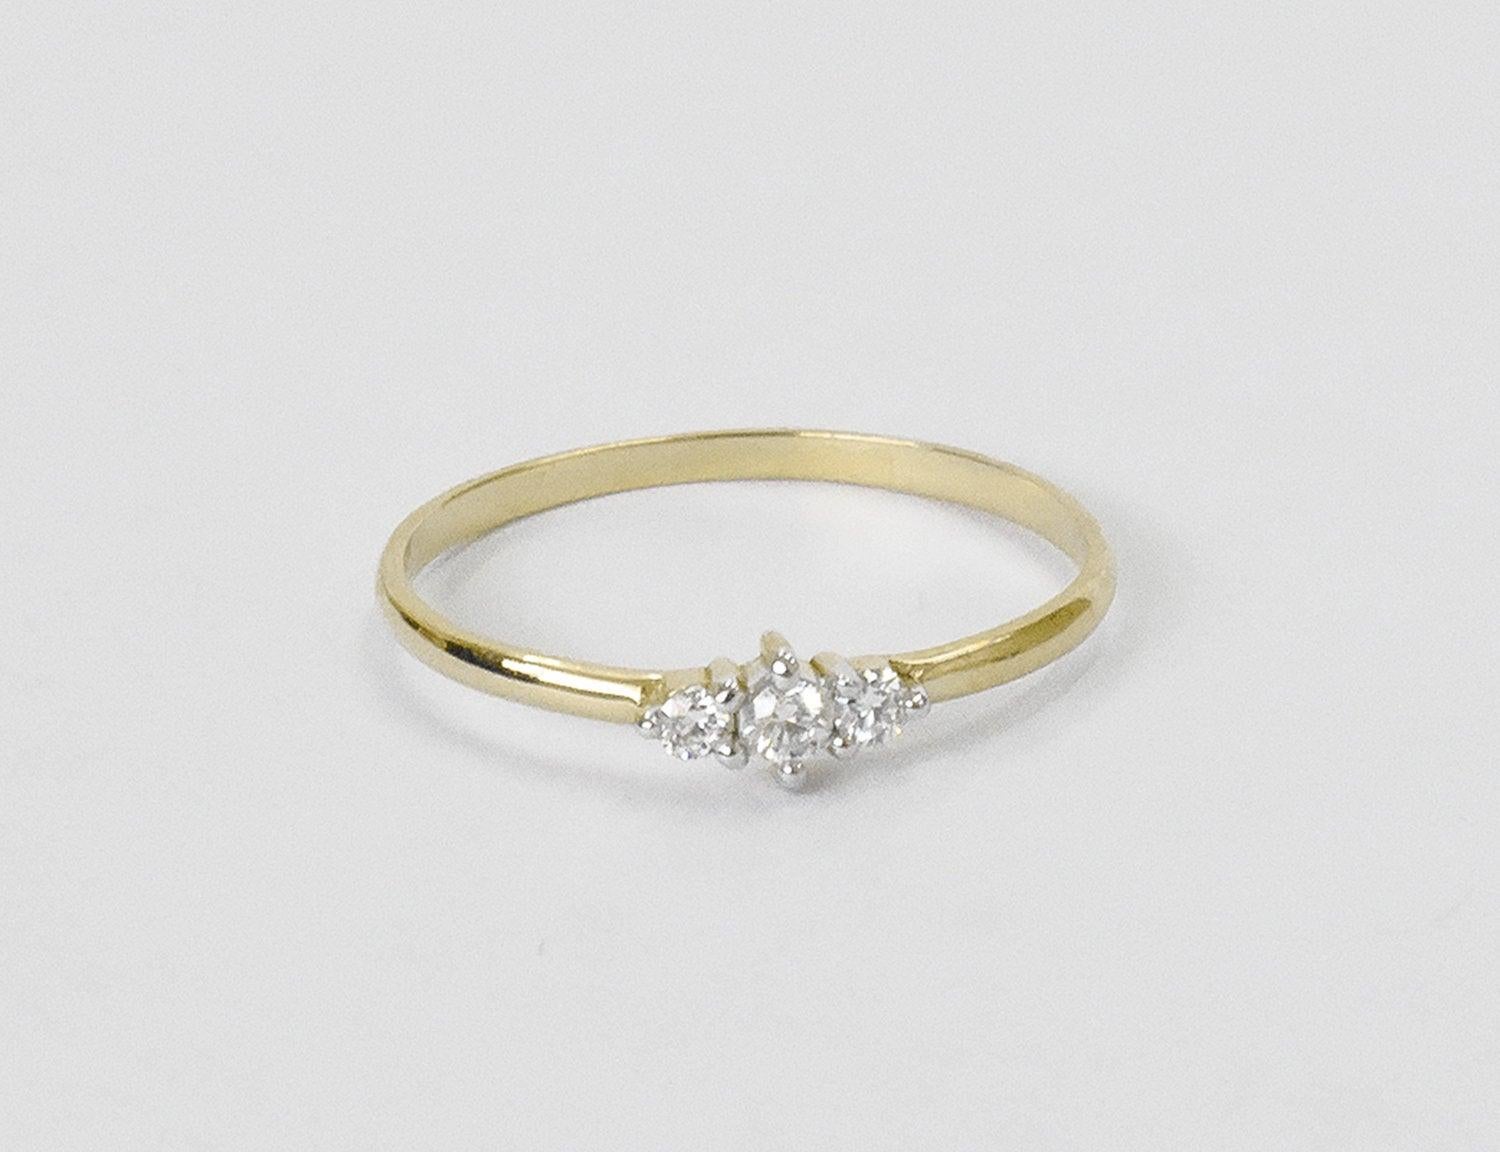 For Sale:  18k Gold Three Stone Diamond Engagement Ring Trio Diamond Ring 4